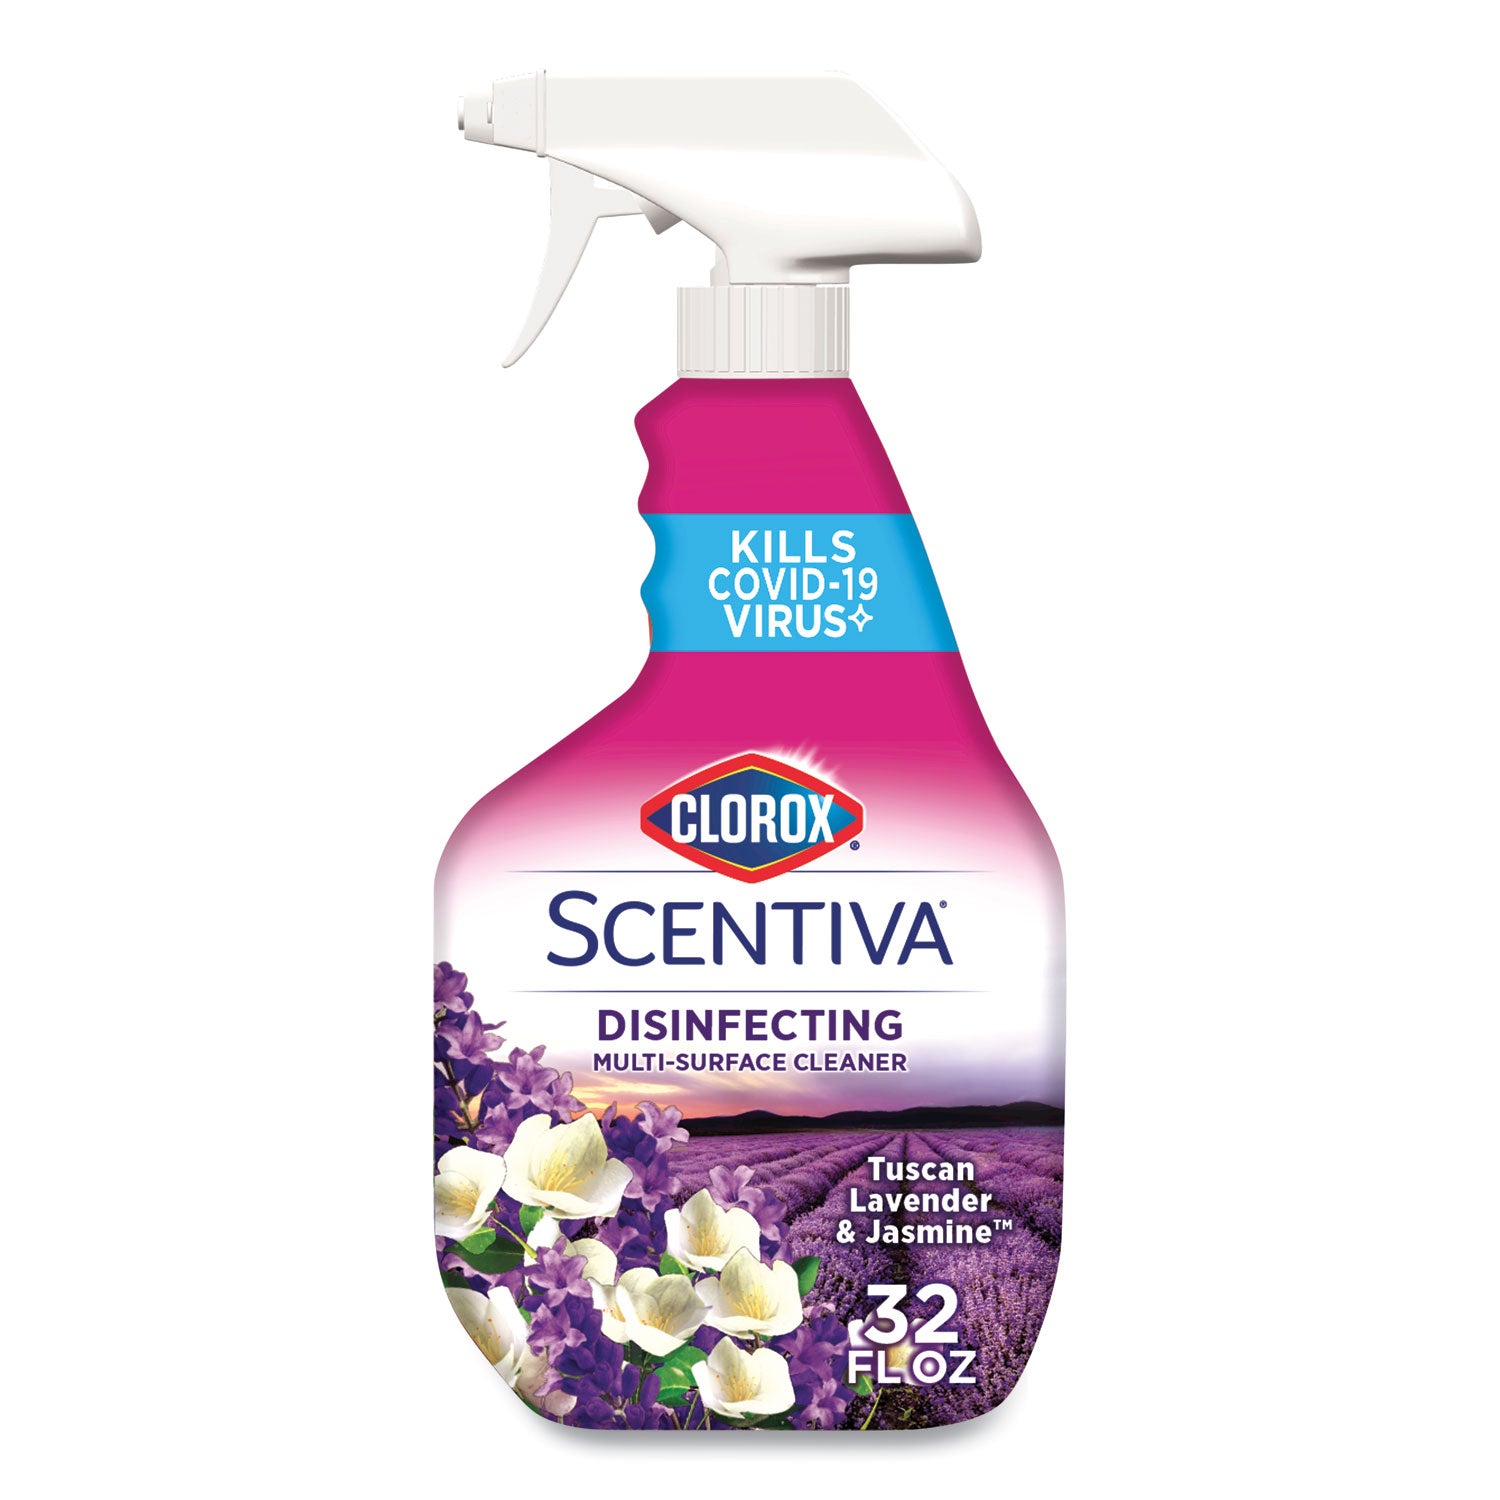 scentiva-multi-surface-cleaner-tuscan-lavender-and-jasmine-32oz-spray-bottle_clo31387ea - 7